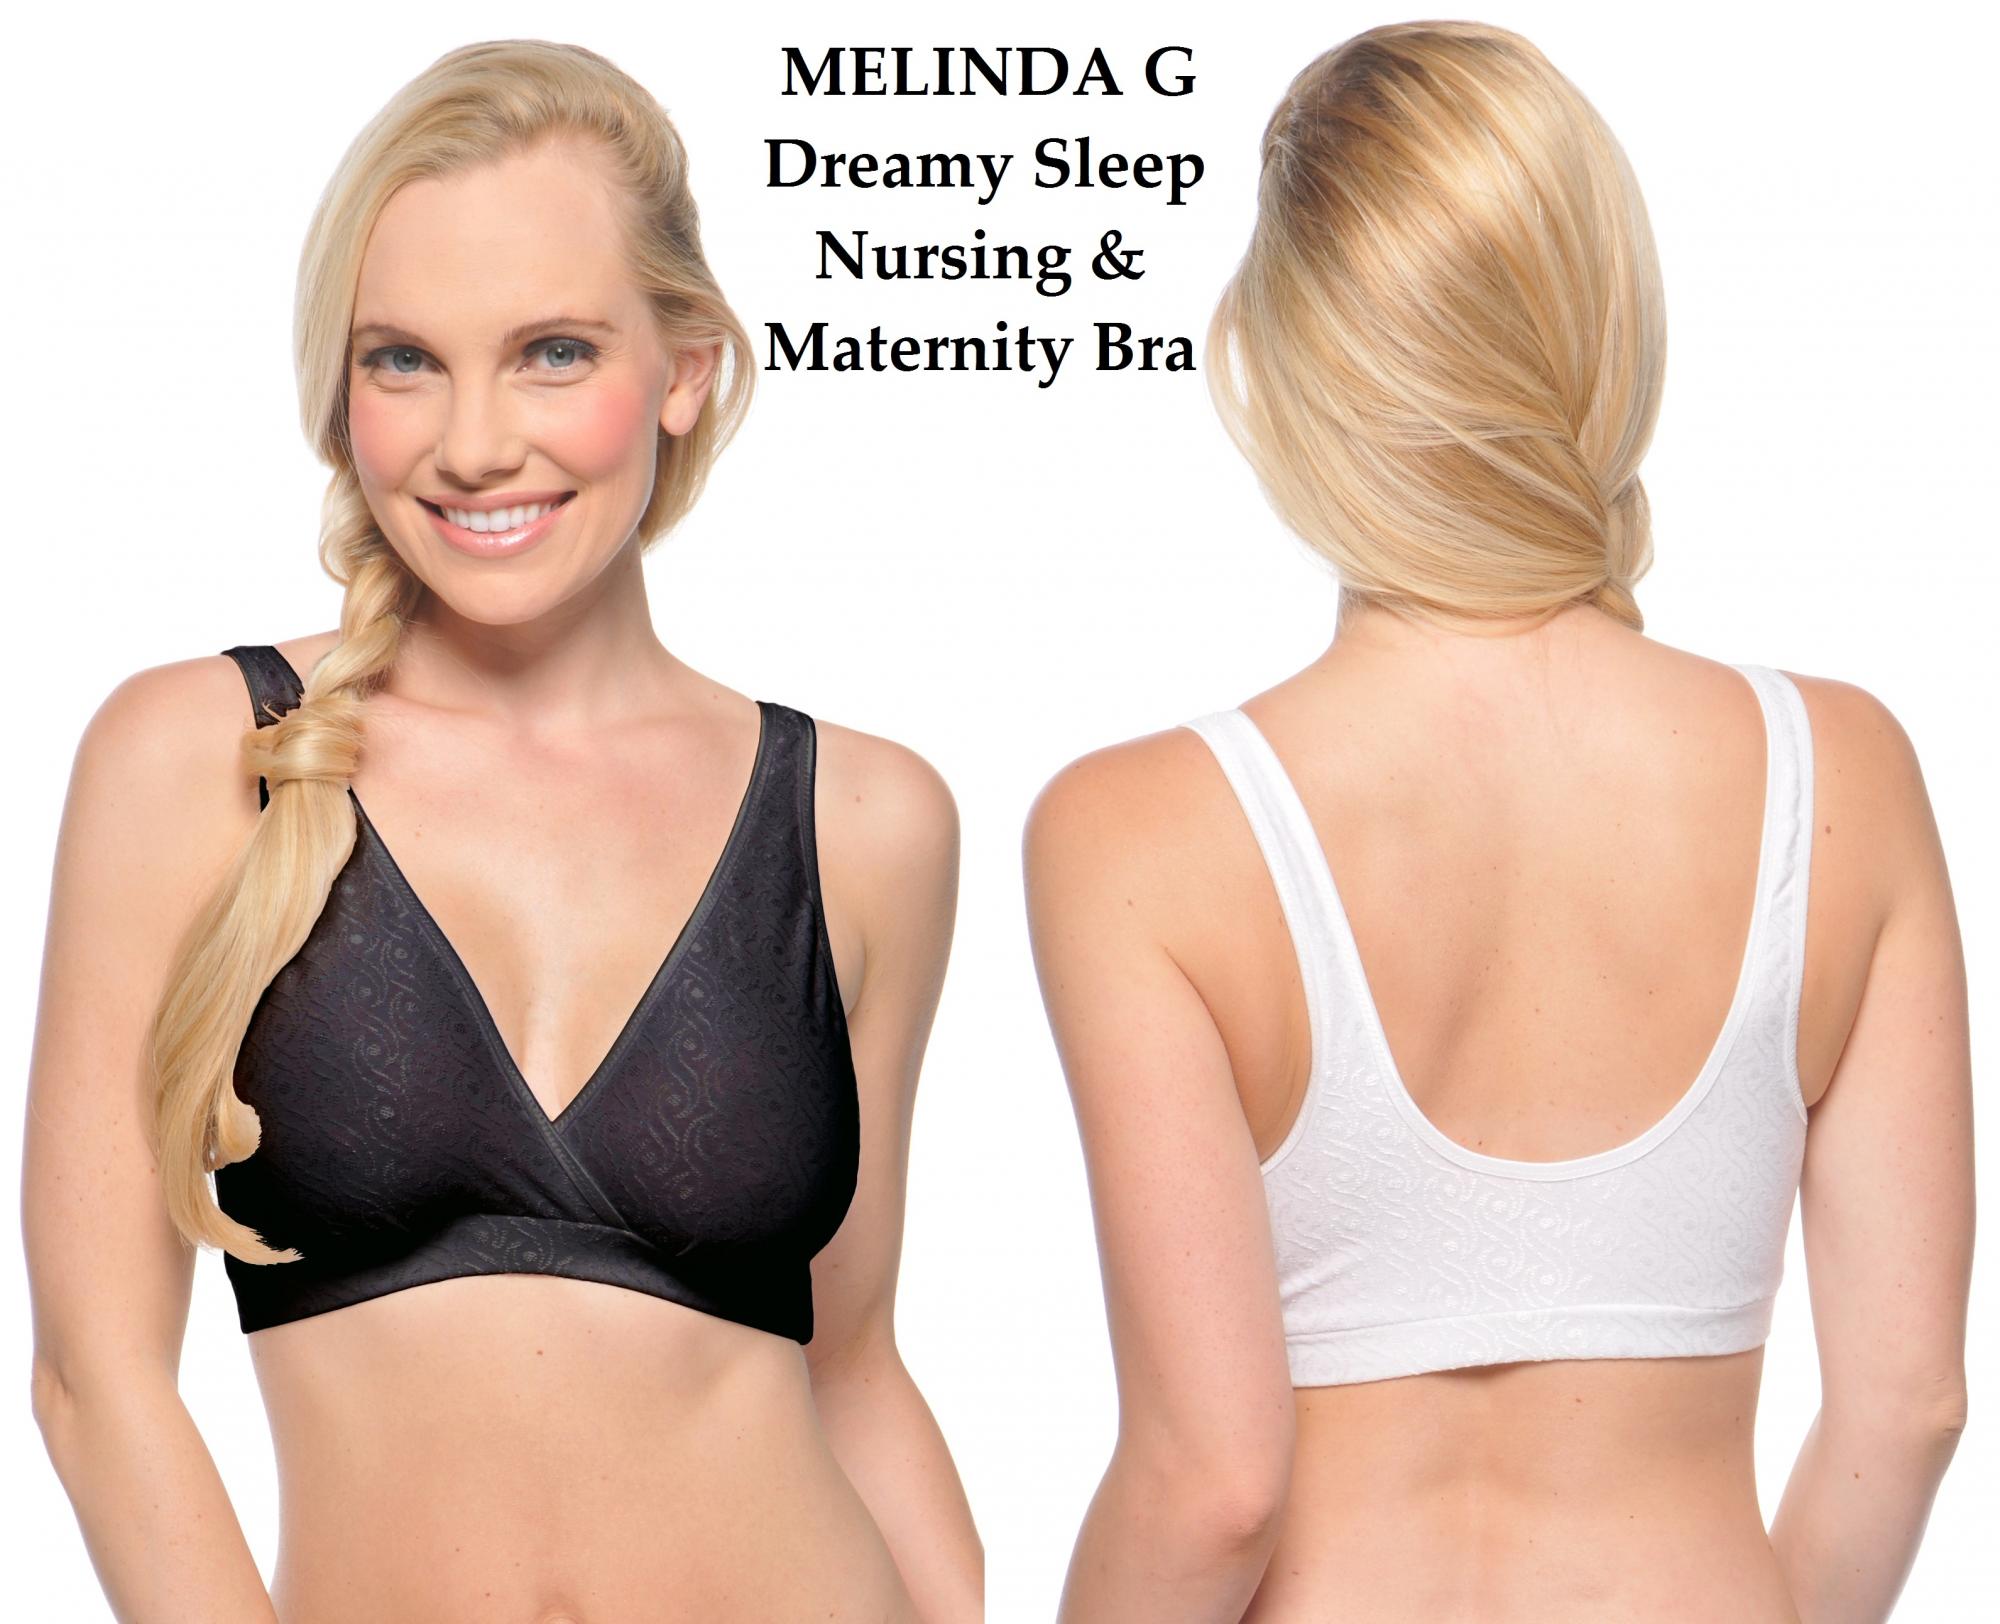 Melinda G Dreamy Sleep Nursing & Maternity Bra